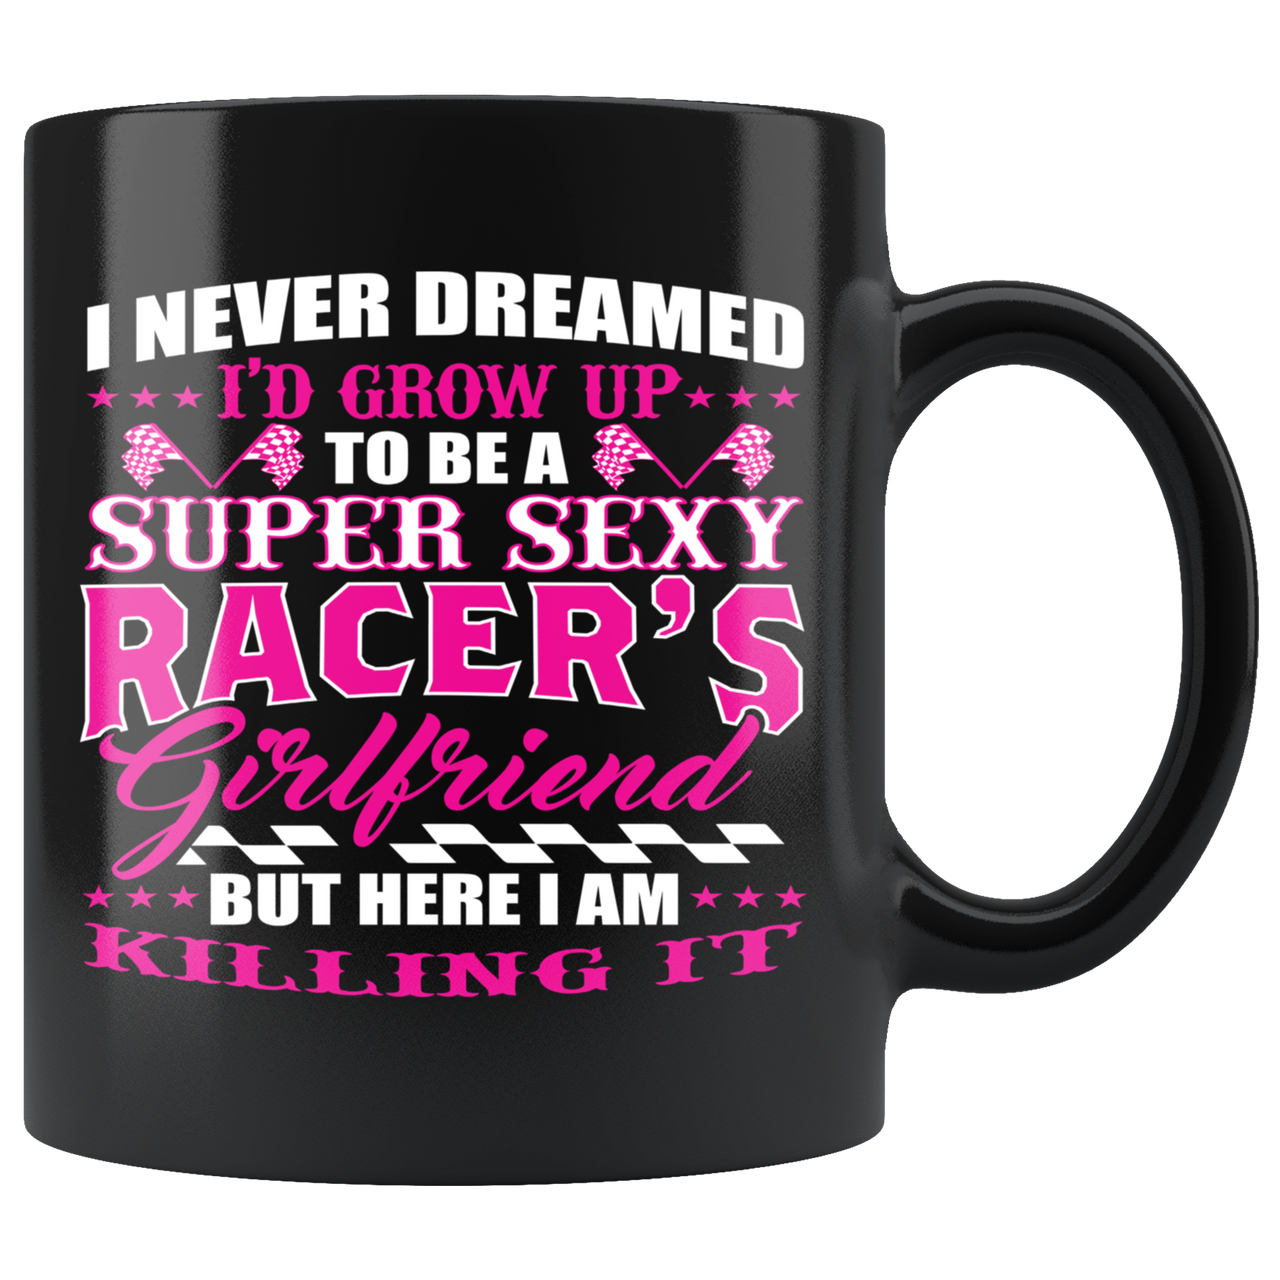 I Never Dreamed I'd Grow Up To Be A Super Sexy Racer's Girlfriend Mug!